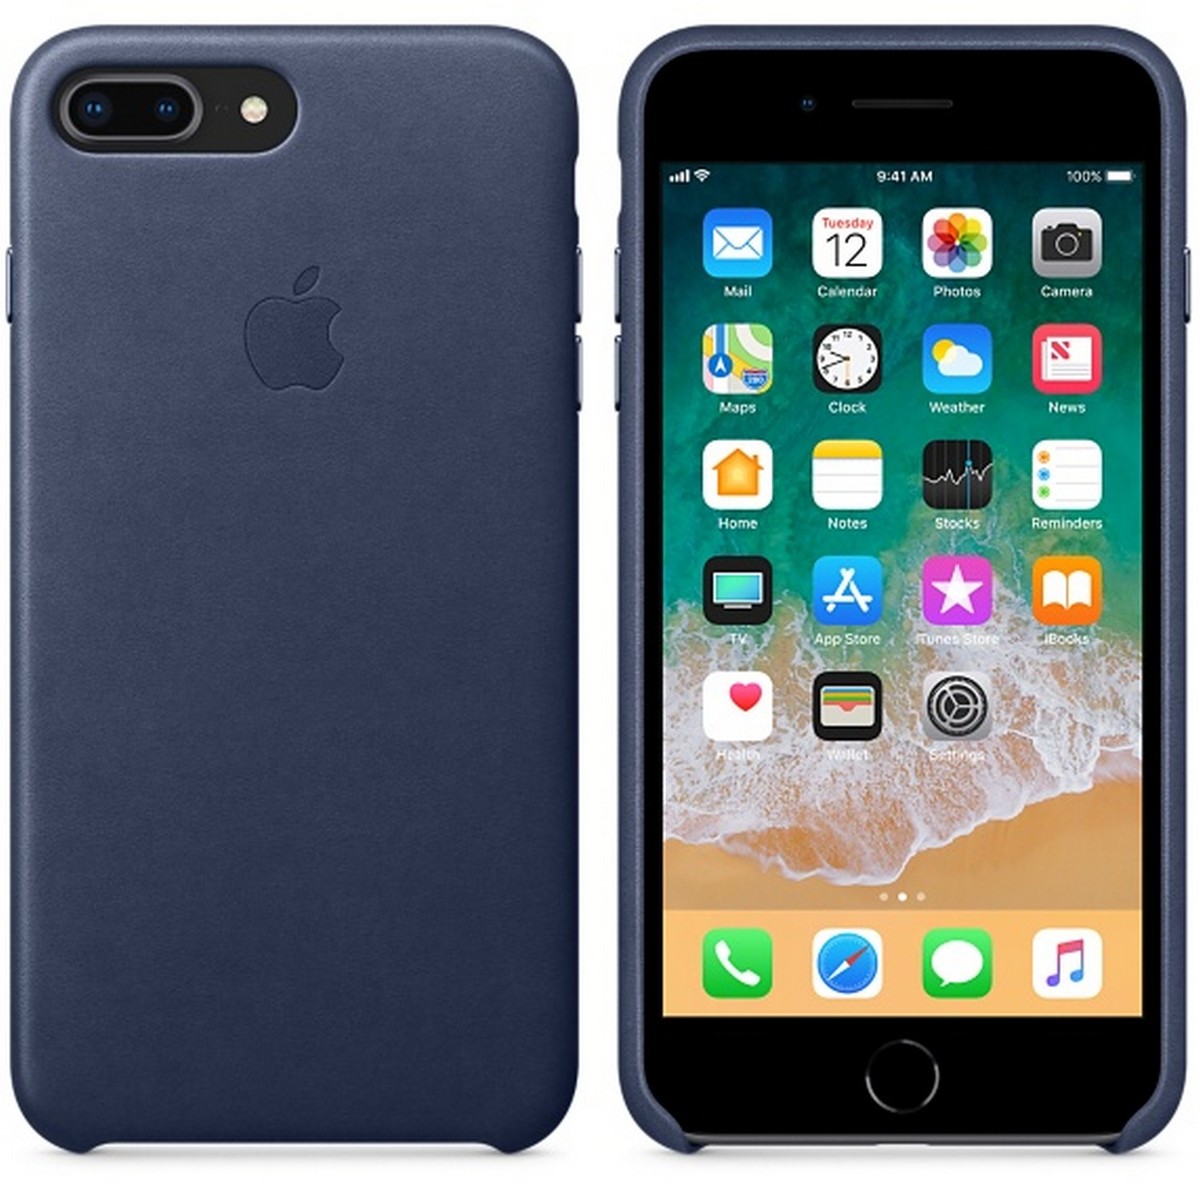 Apple iPhone 8 Plus Leather Case Midnight Blue